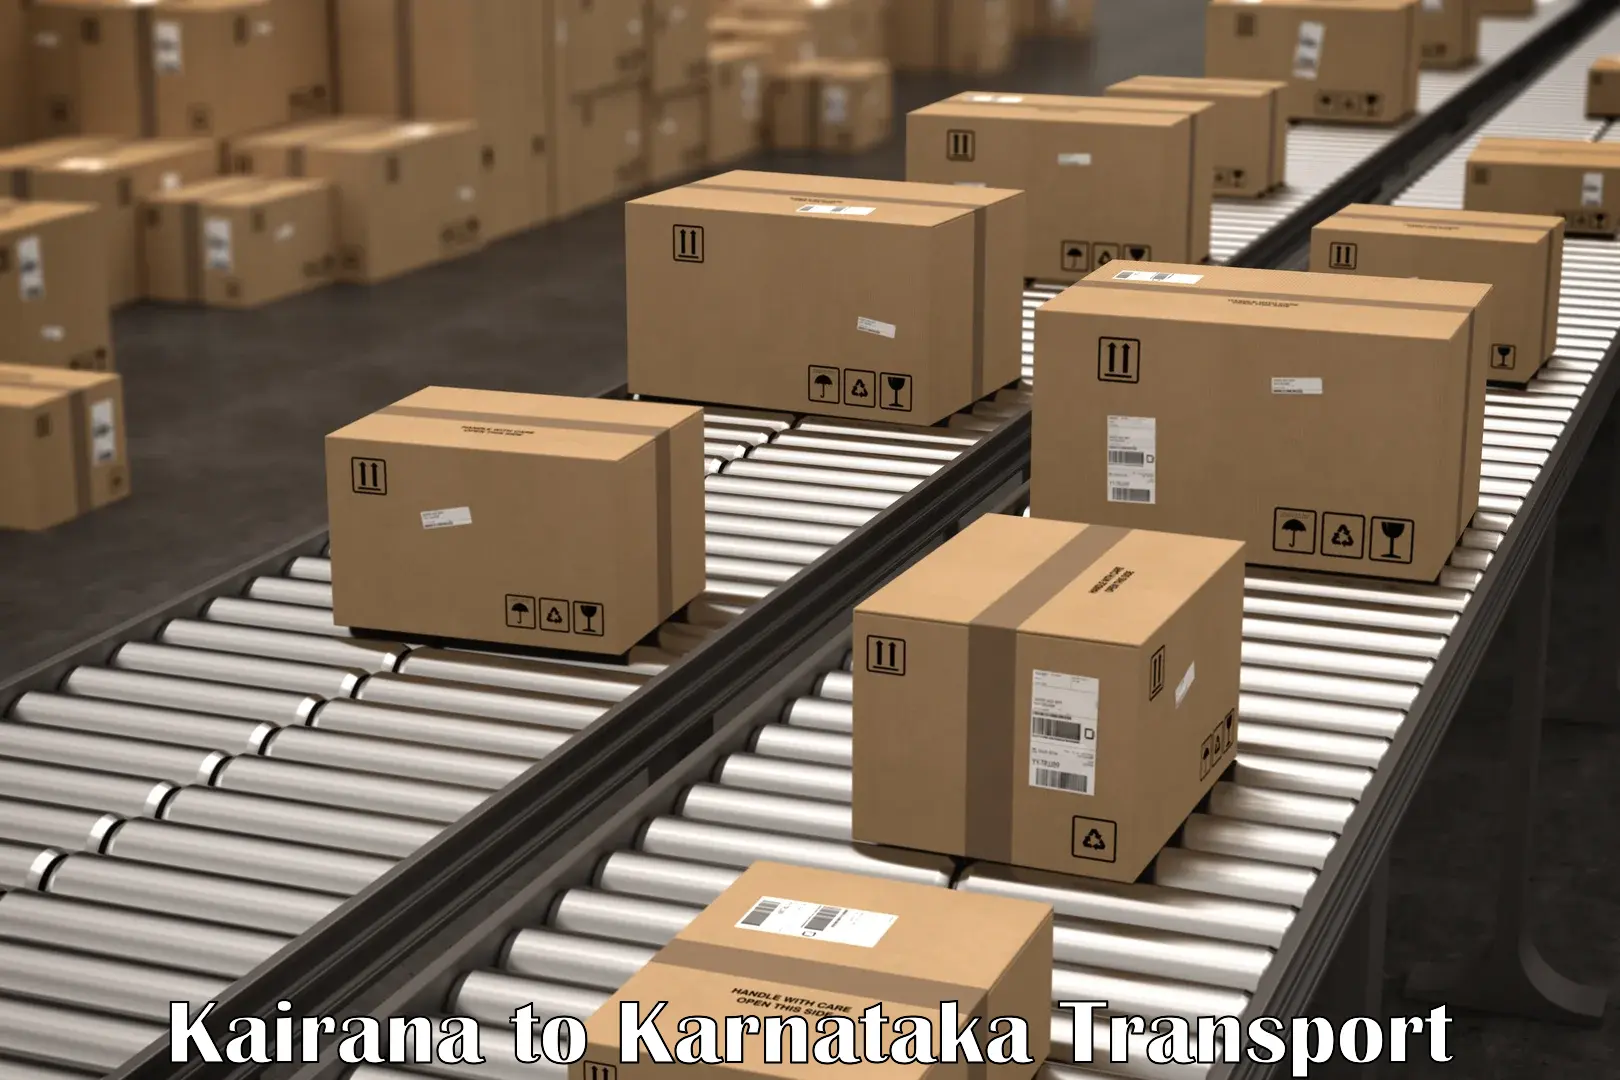 Truck transport companies in India Kairana to Karnataka